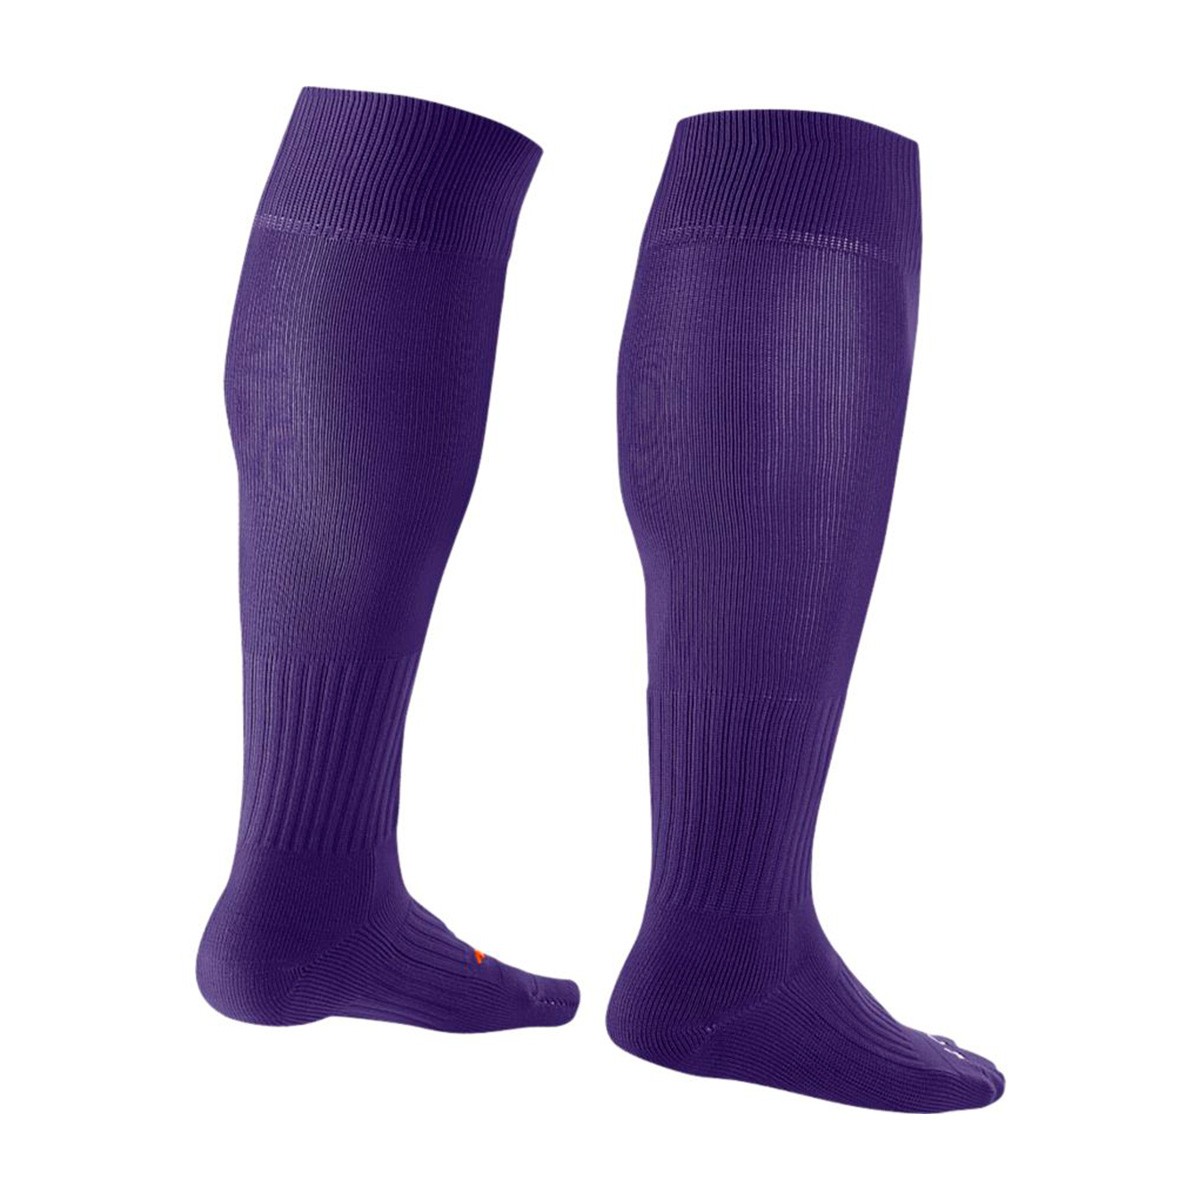 white and purple nike socks